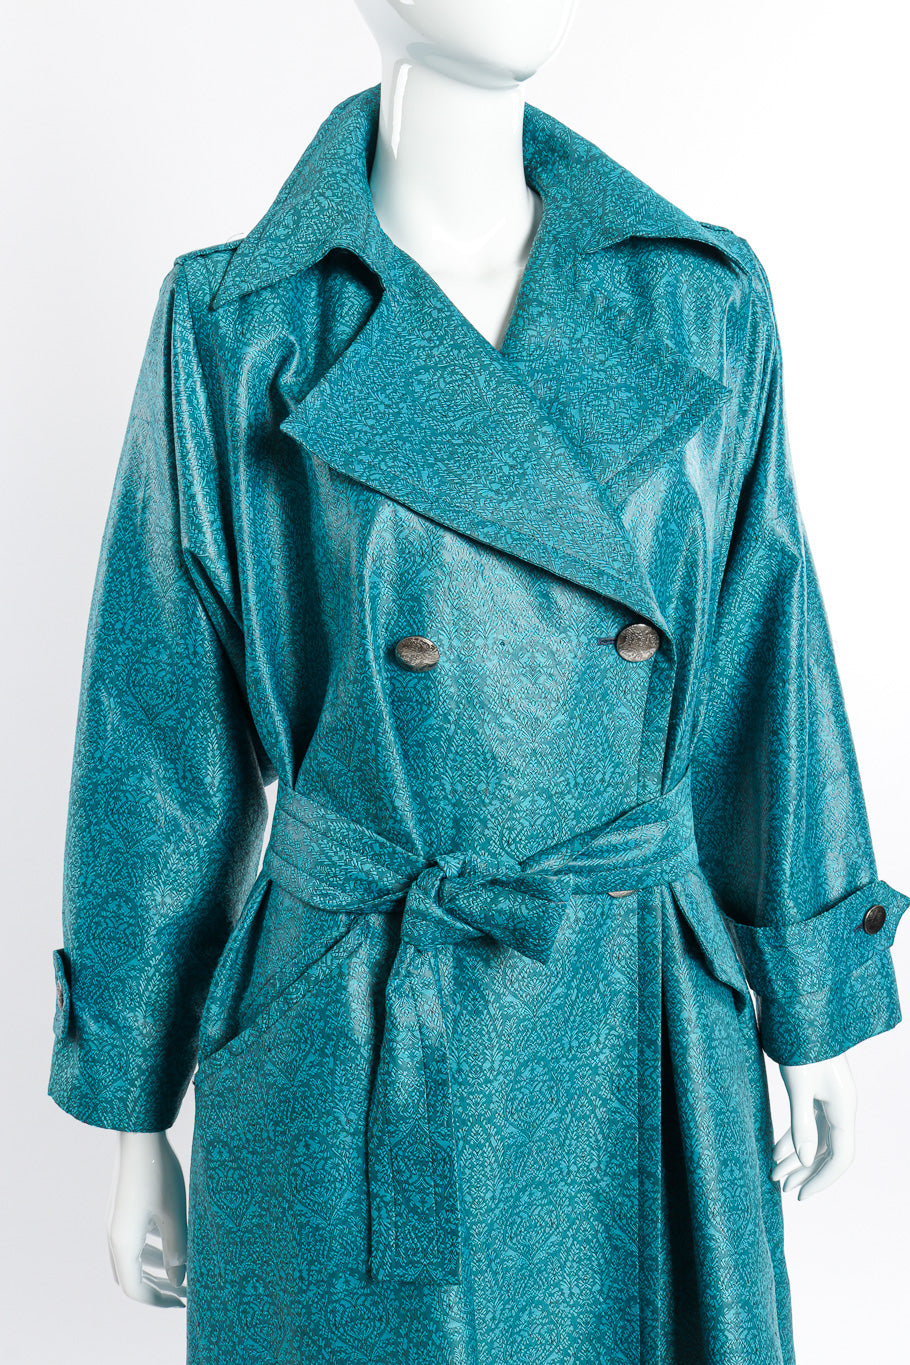 Vintage Yves Saint Laurent Damask Trench Coat front on mannequin closeup @recessla